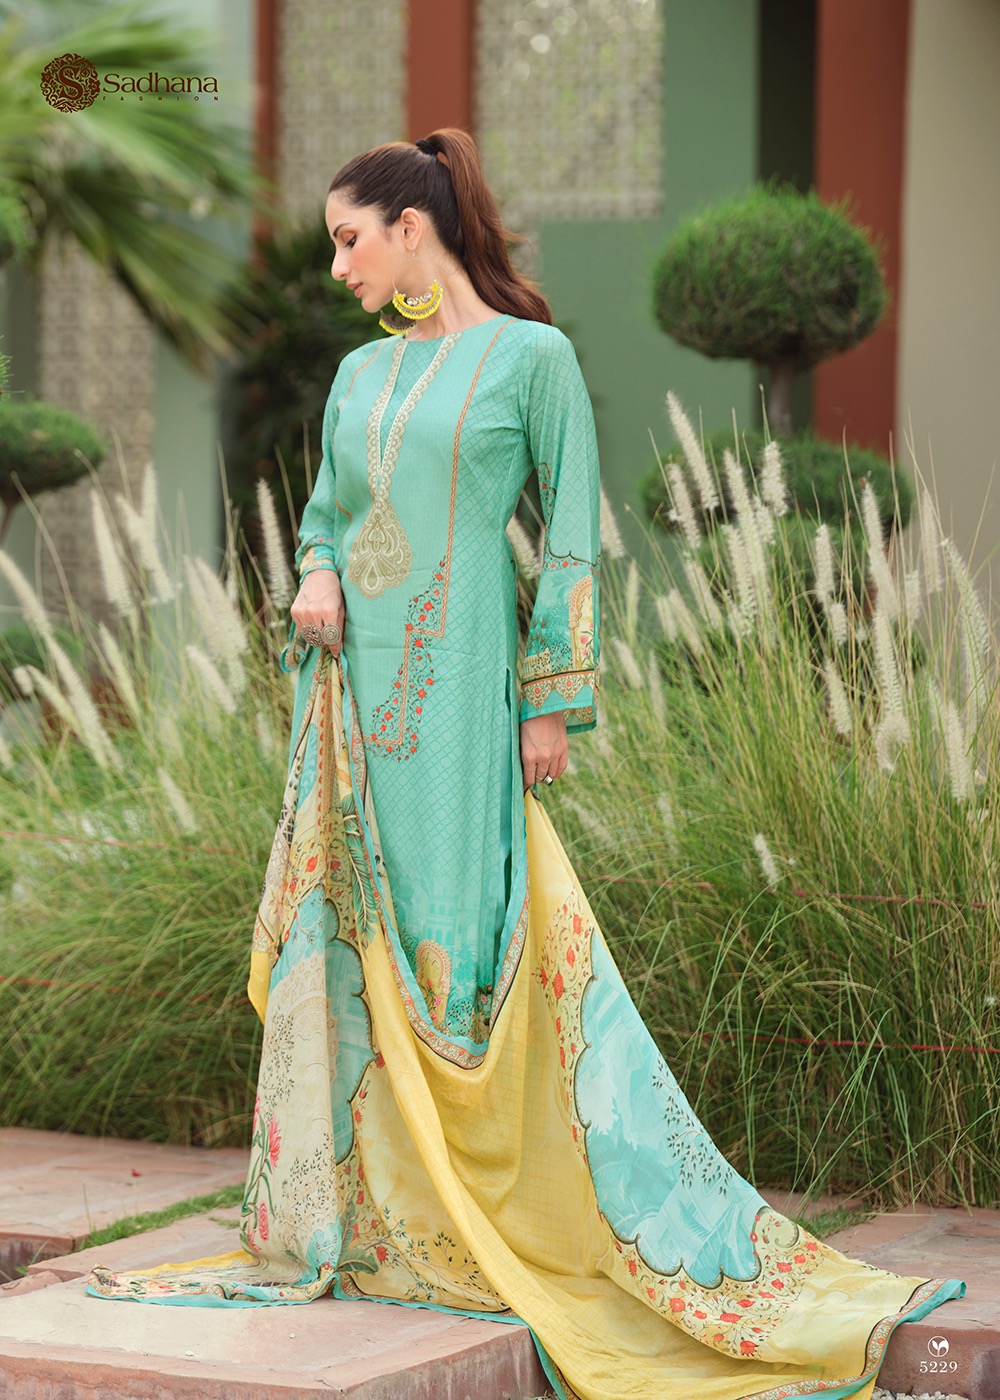 Mehtab Vol 3 Sadhana Pant Style Suits Manufacturer Wholesaler